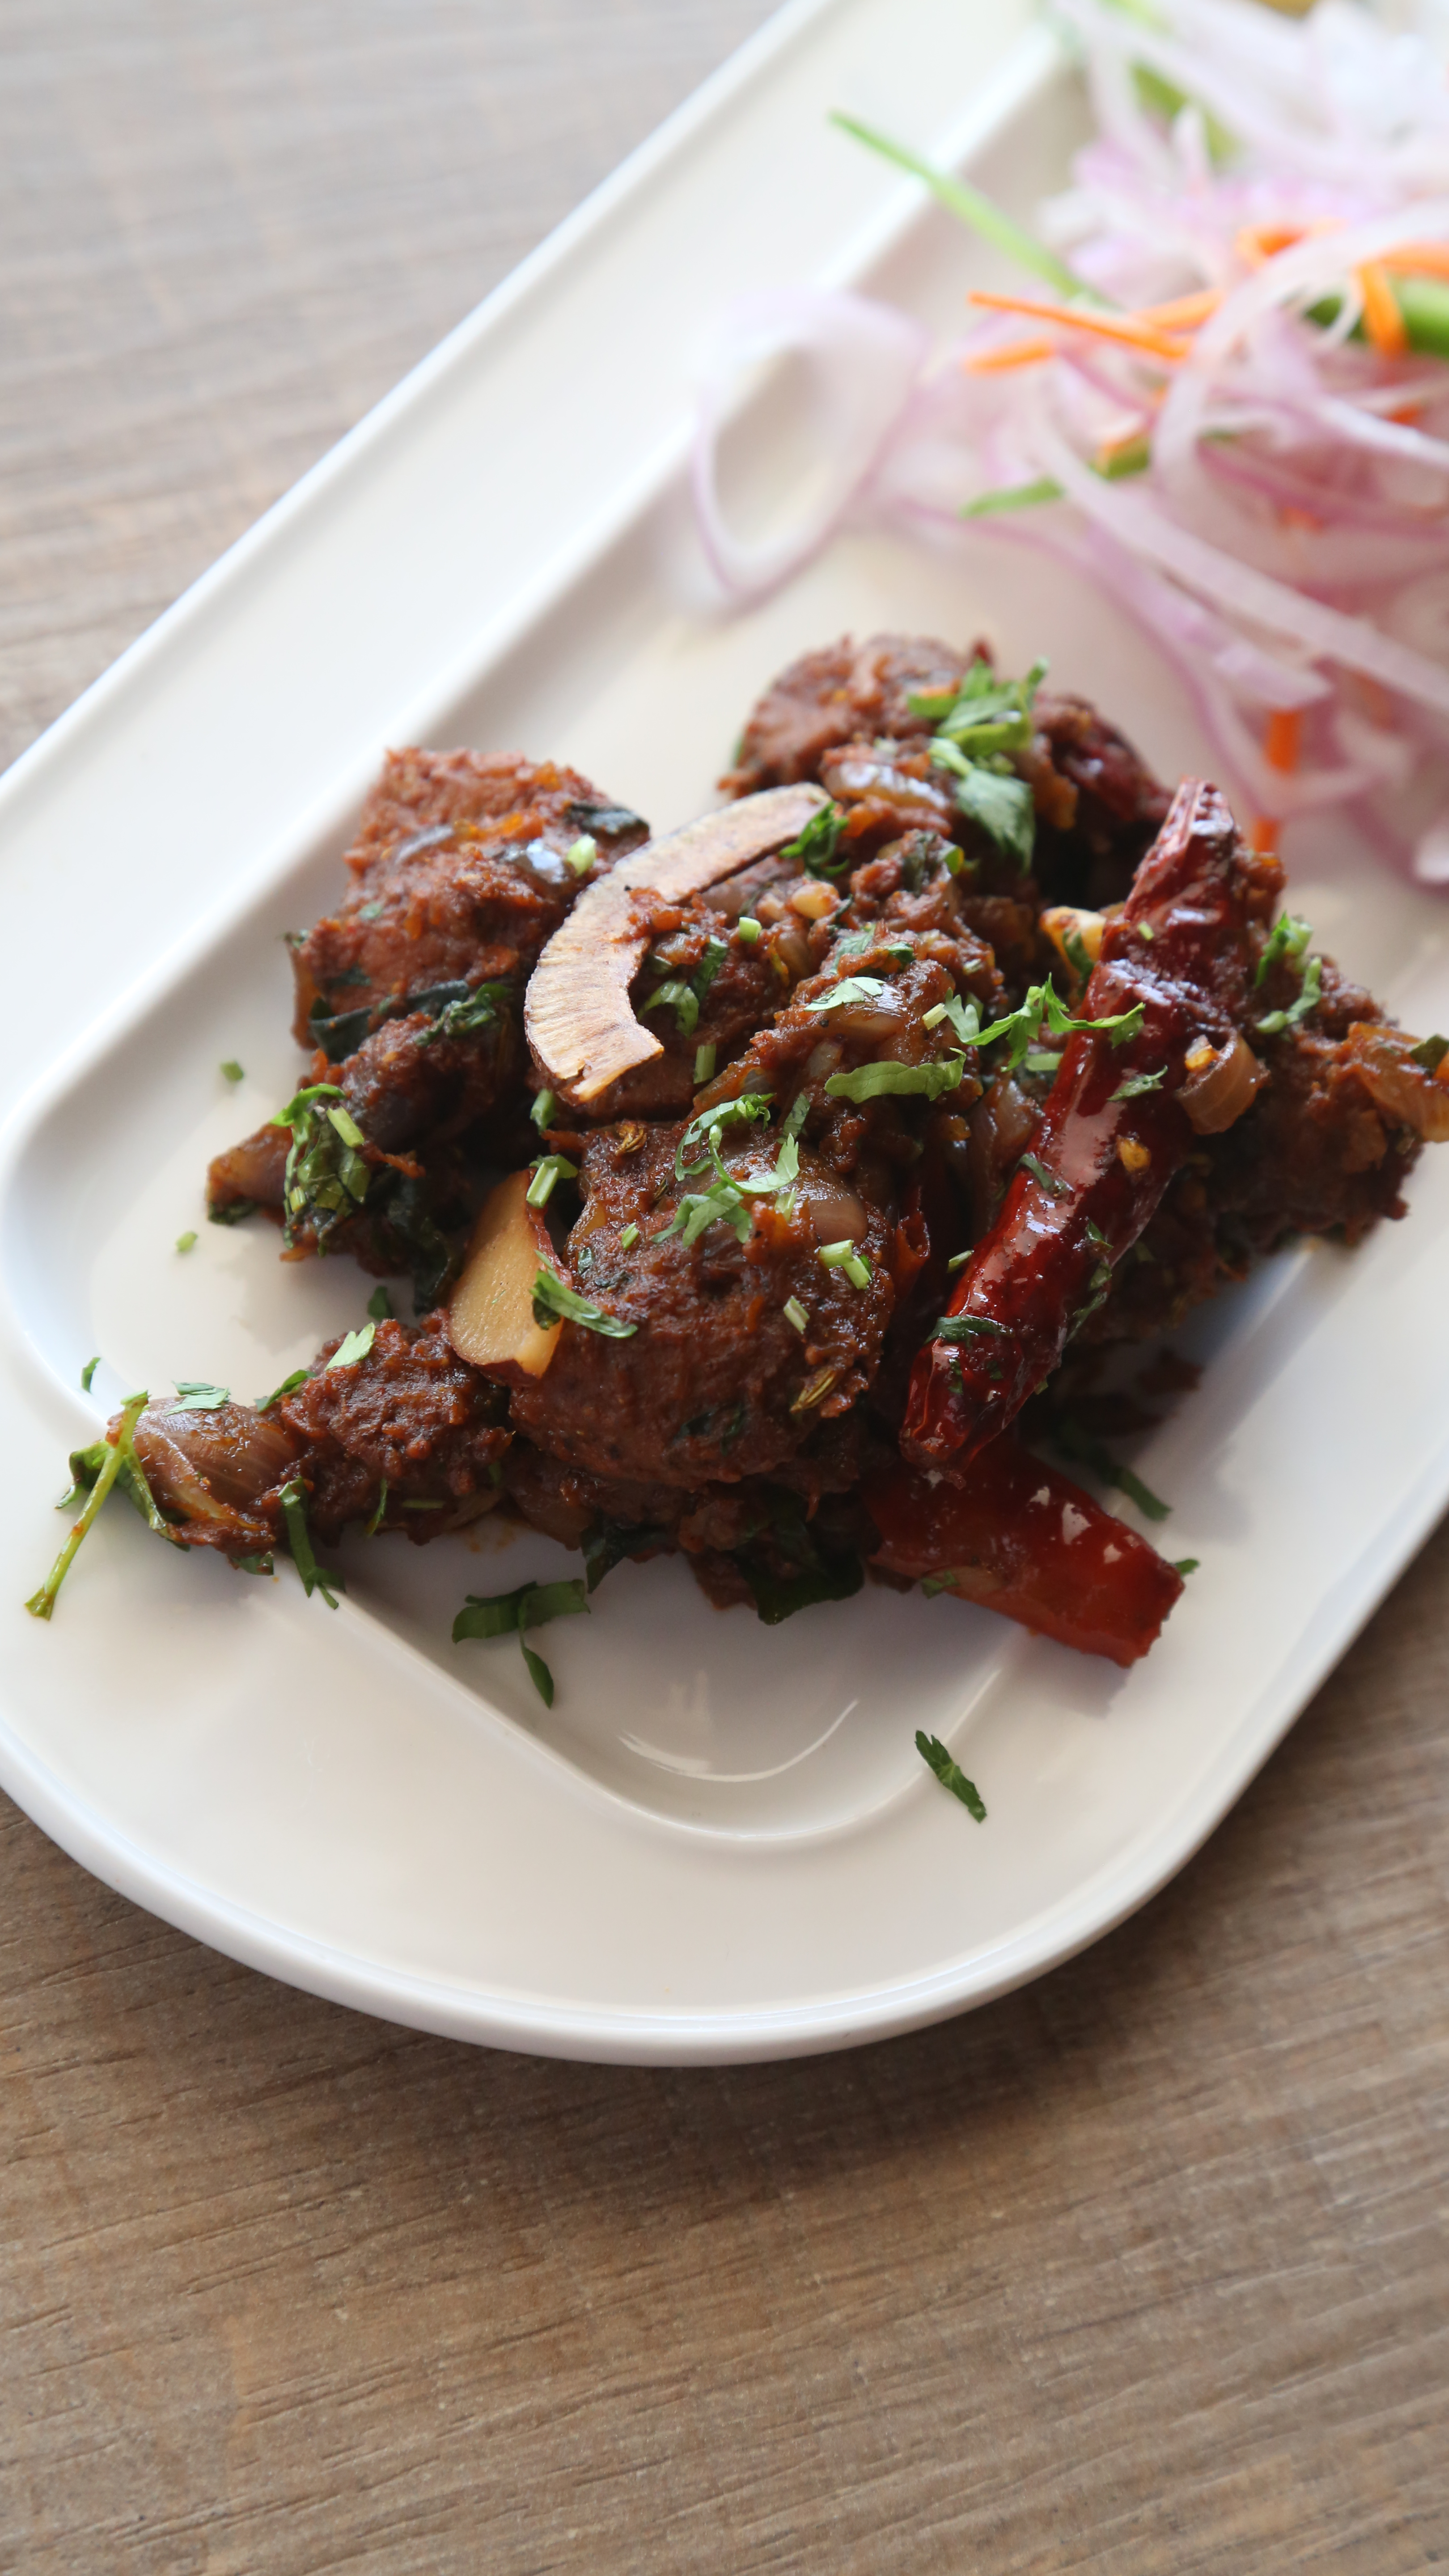 Oman dining: Enjoy Indian delicacies at Maurya’s restaurant